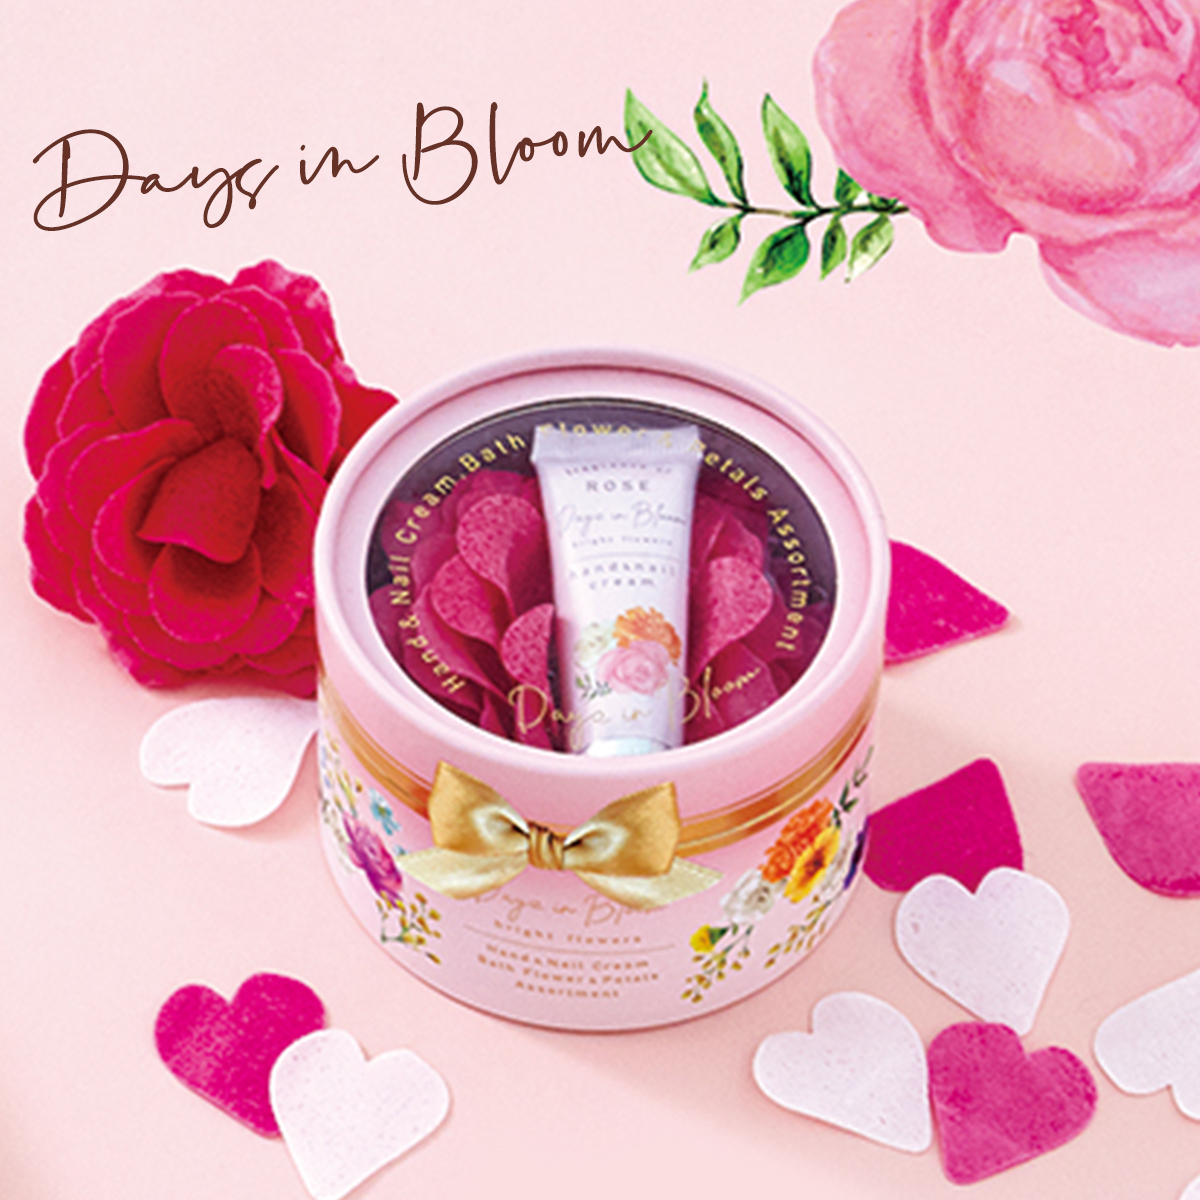 【Days in Bloom】デイズインブルーム bright flowers ブルーミングプチギフト ローズ